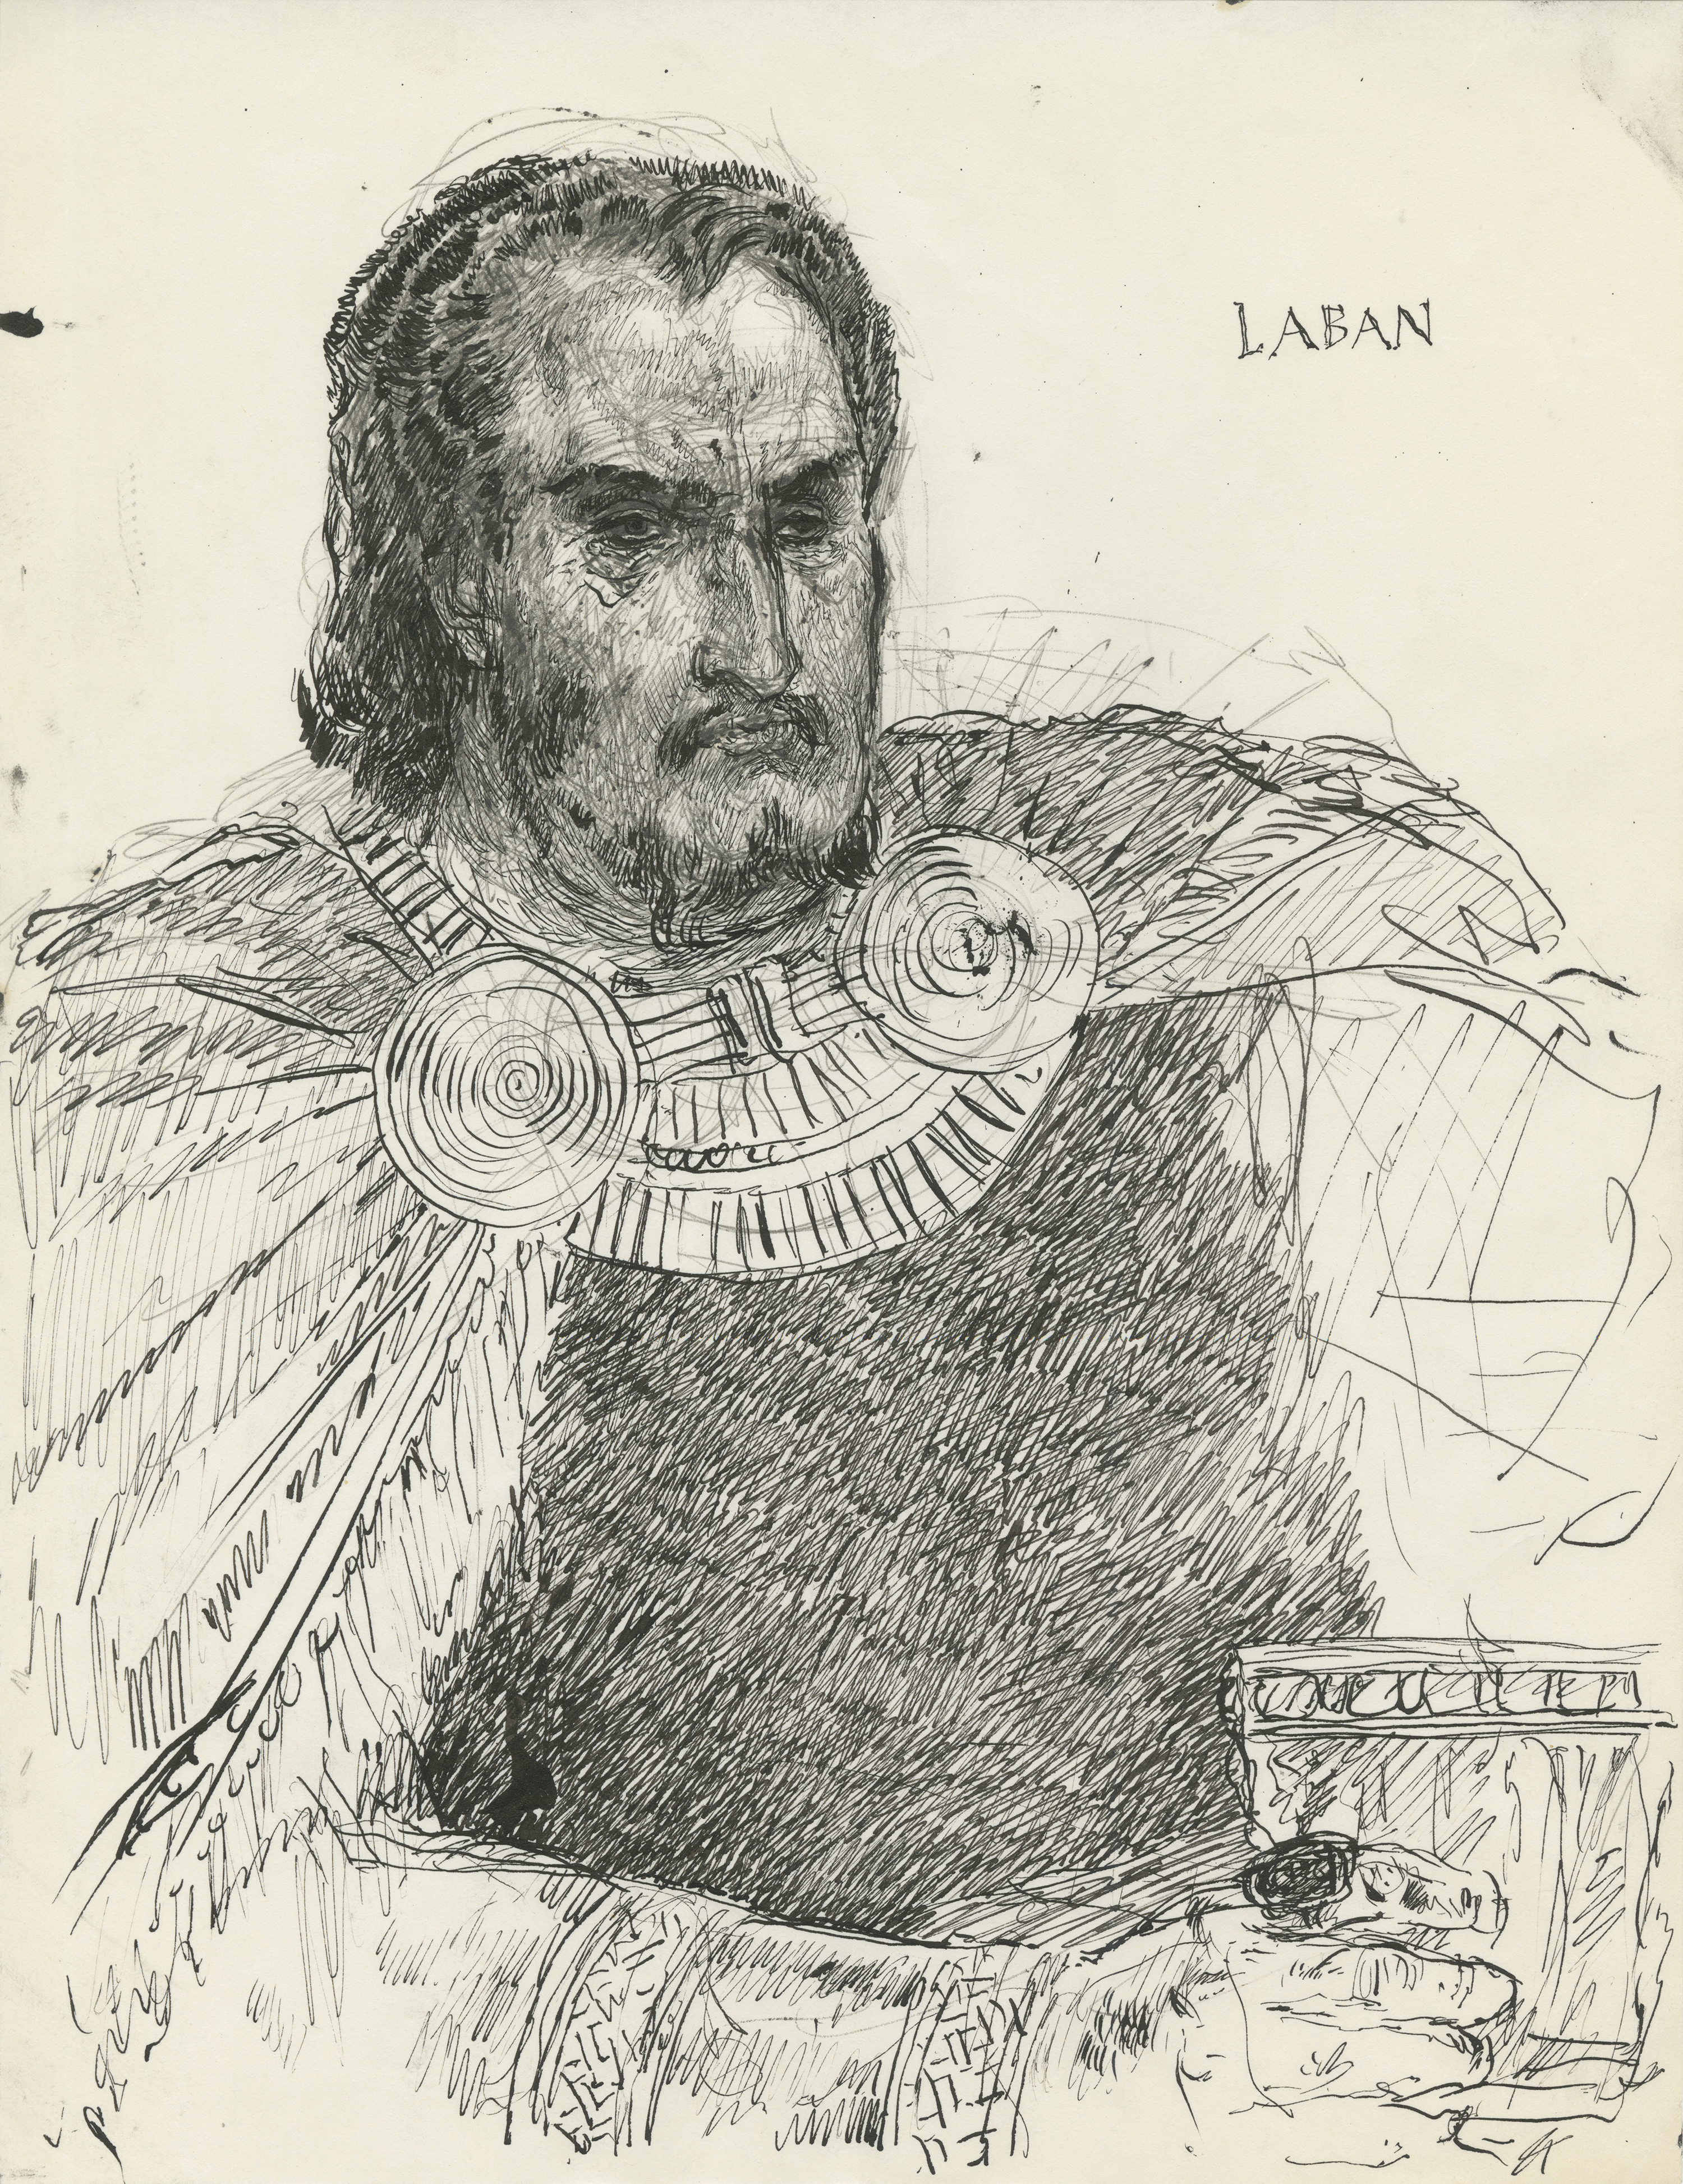 Sketch of “Laban”